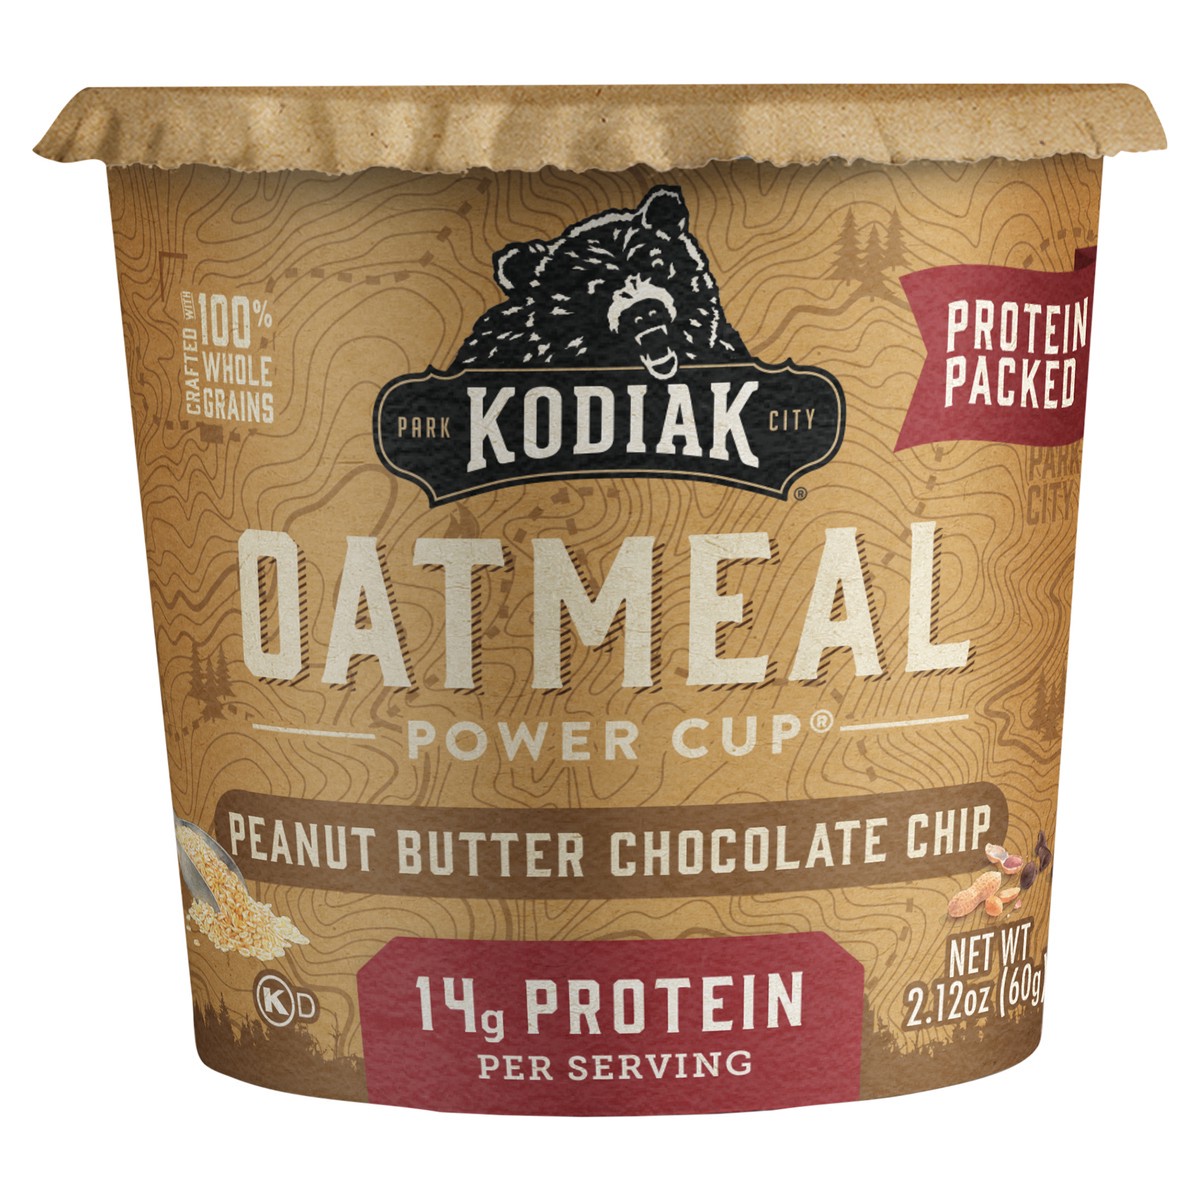 slide 1 of 5, Kodiak Cakes Oatmeal Power Cup, Peanut Butter Chocolate Chip, 2.12 oz, 2.12 oz